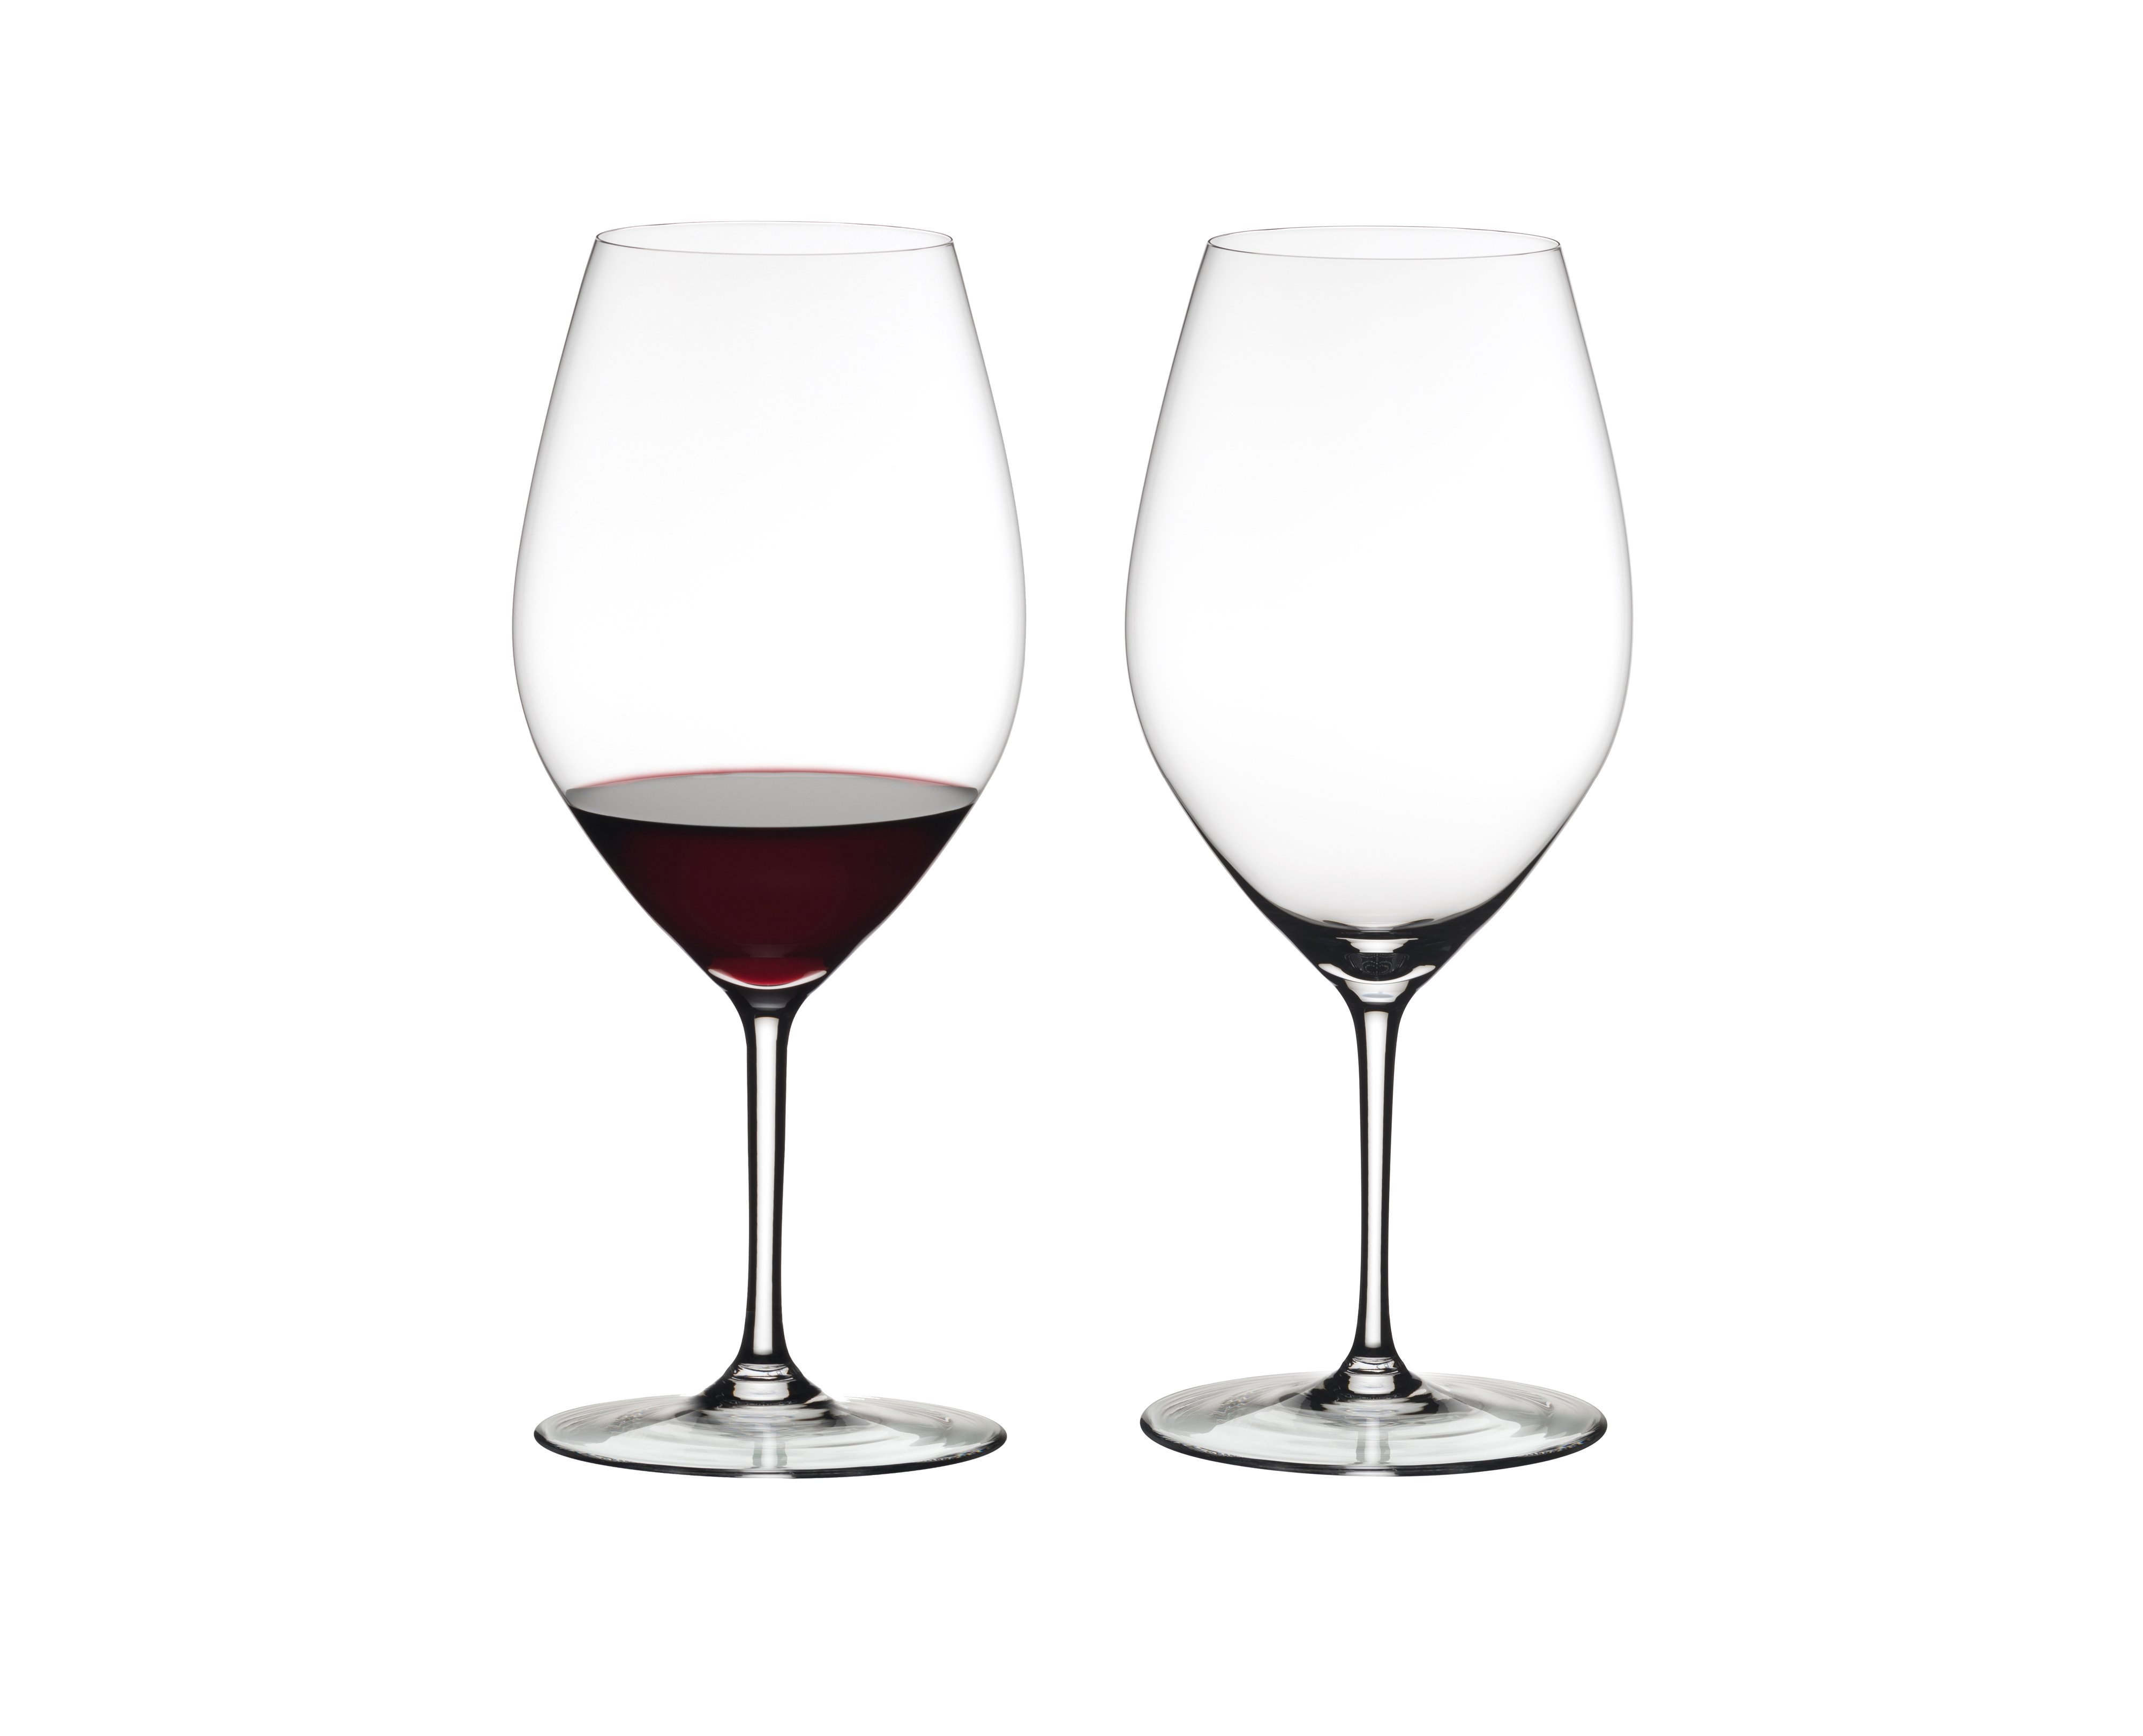 Riedel 6422/01-4 Red Wine Glasses, Set of 4, Riedel Wine Friendly, Riedel  001 Magnum, 35.8 fl oz (995 ml)